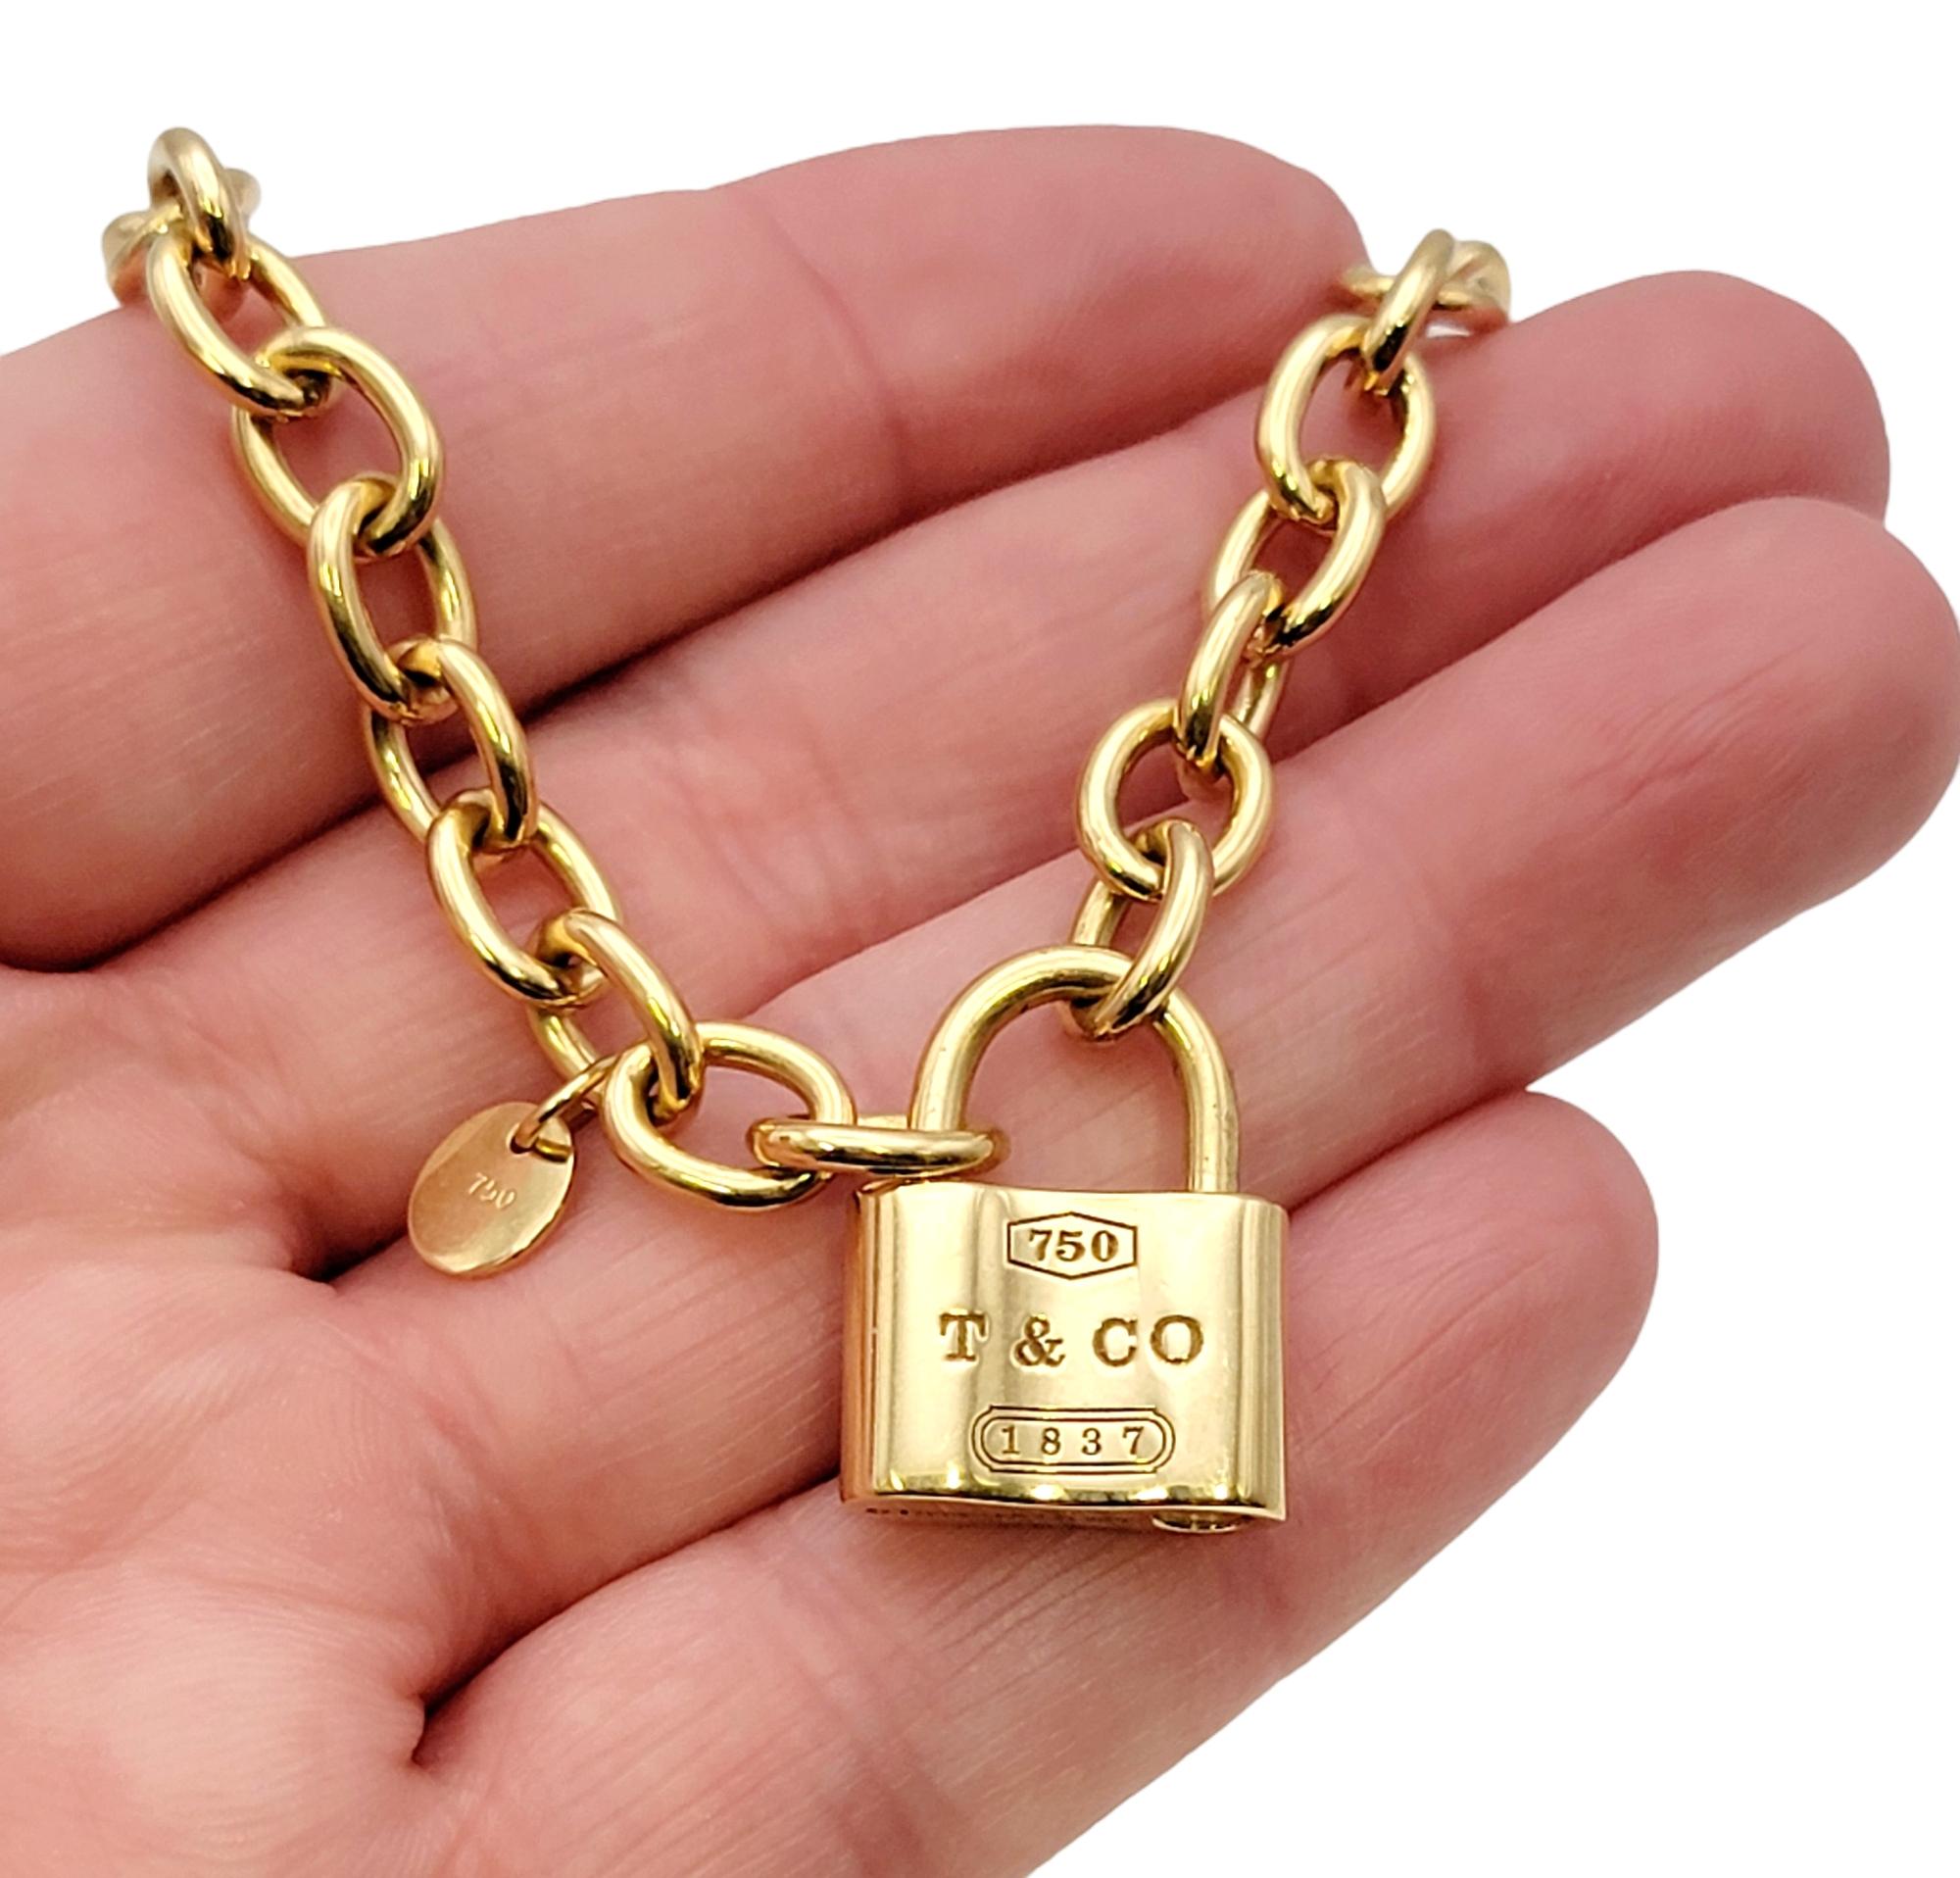 Women's Tiffany & Co. 1837 Lock Circle Chain Link Bracelet in 18 Karat Yellow Gold